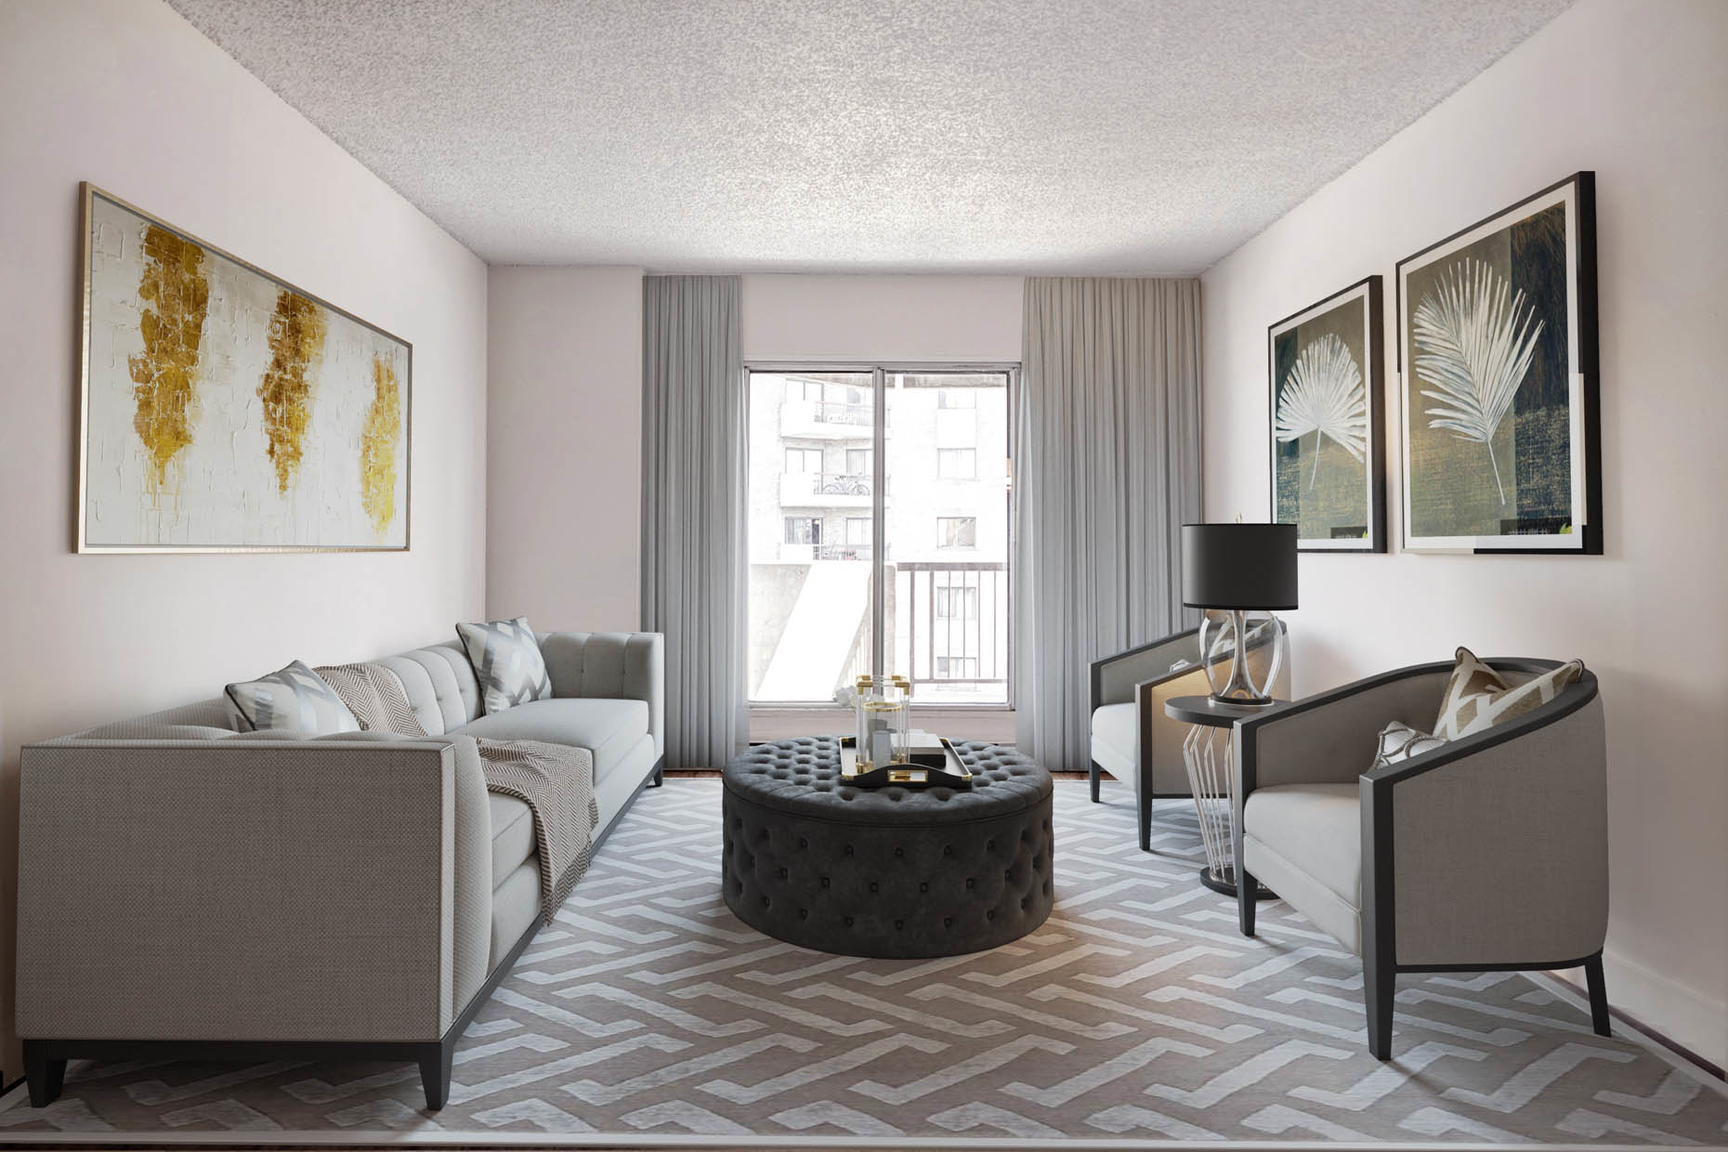 2 bedroom Apartments for rent in Ville St-Laurent - Bois-Franc at Complexe Deguire - Photo 02 - RentersPages – L417457